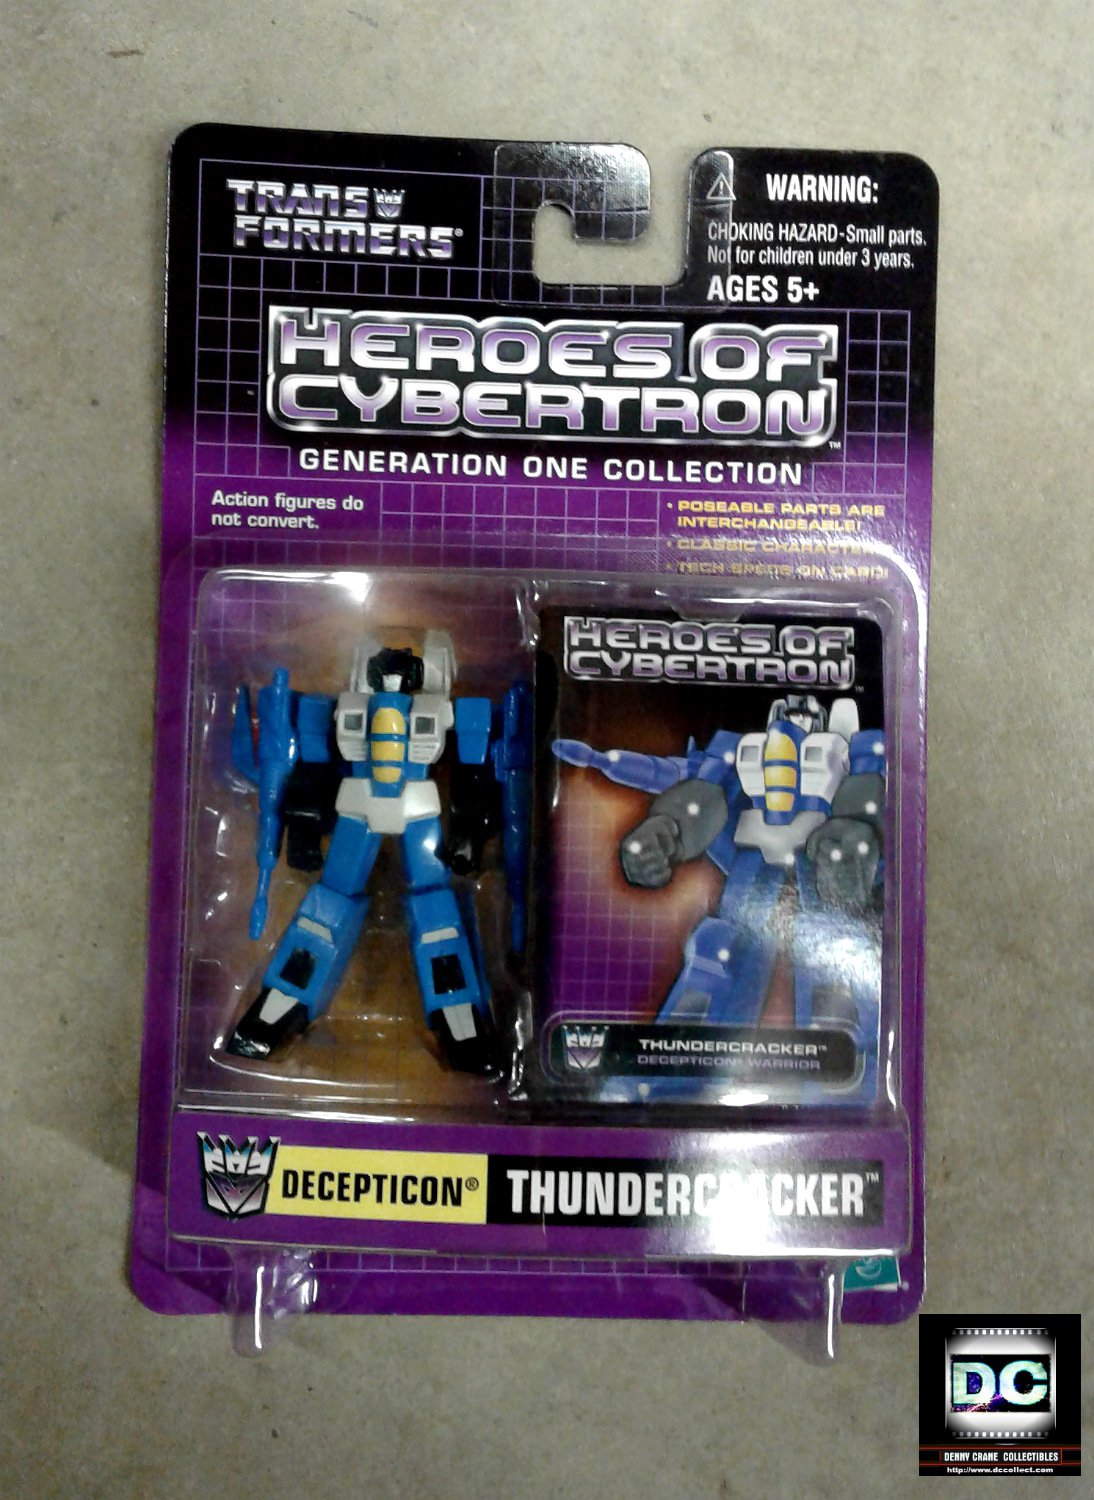 Transformers scf G1 Thundercracker pvc Heroes of Cybertron Hasbro Classic Mini Figure #27194